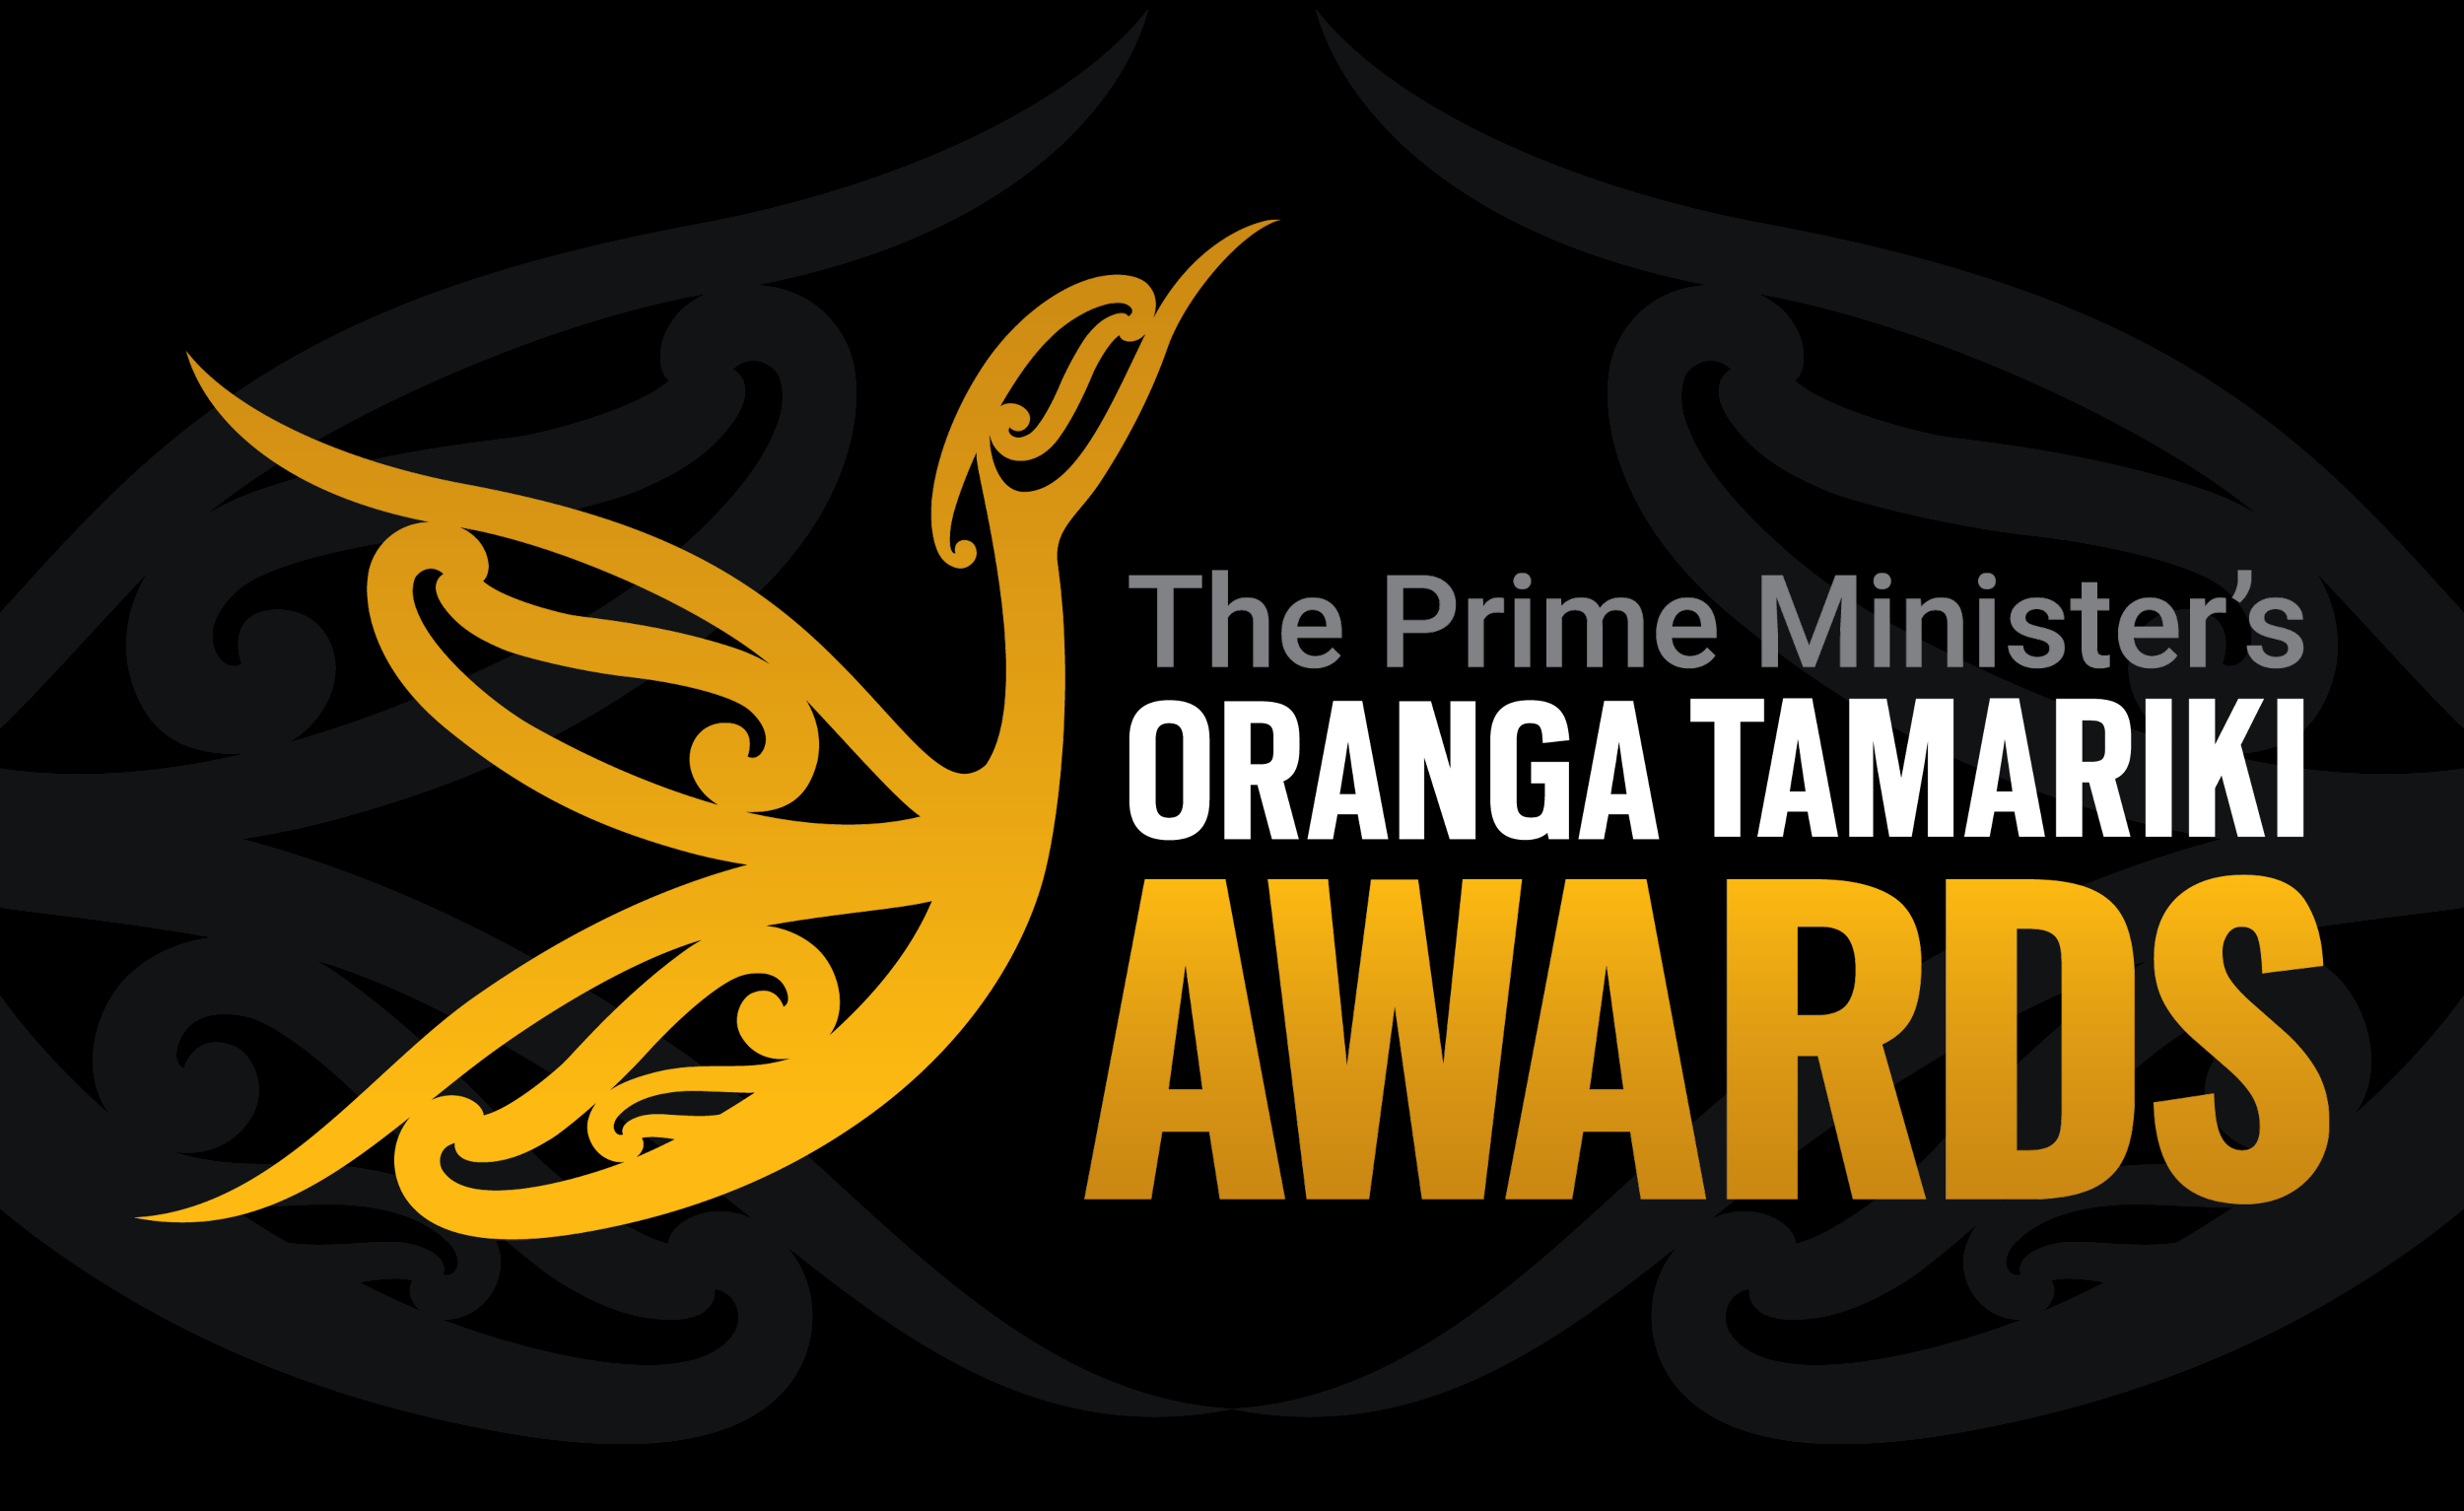 The Prime Minister's Oranga Tamariki Award's logo